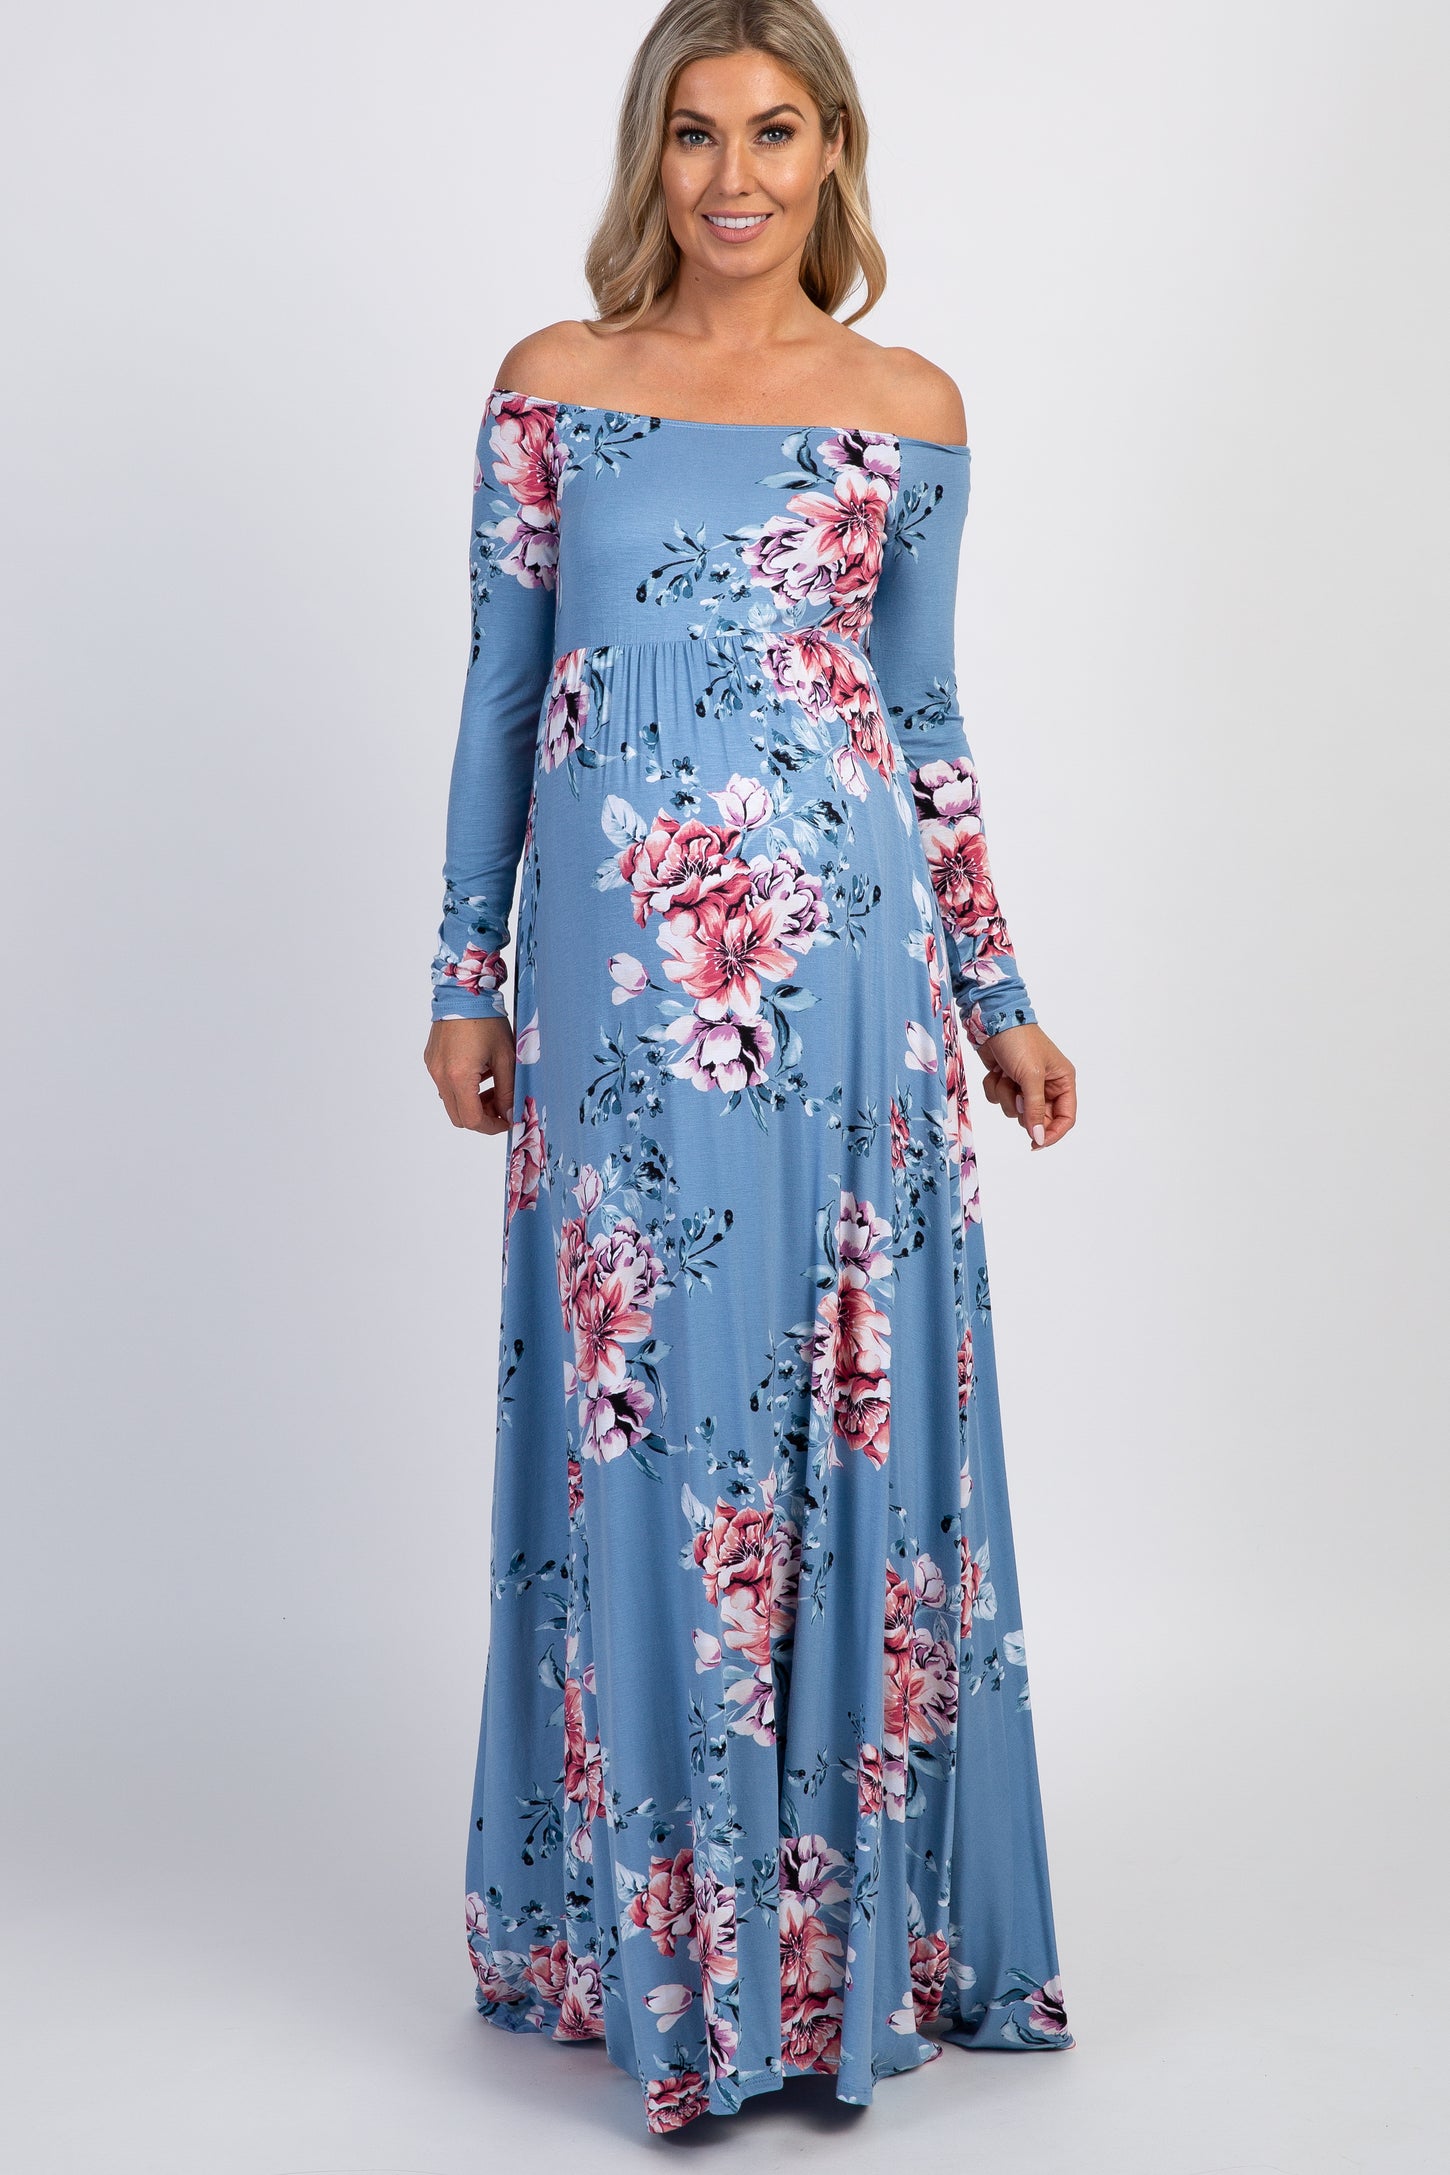 PinkBlush Light Blue Floral Off Shoulder Maternity Maxi Dress